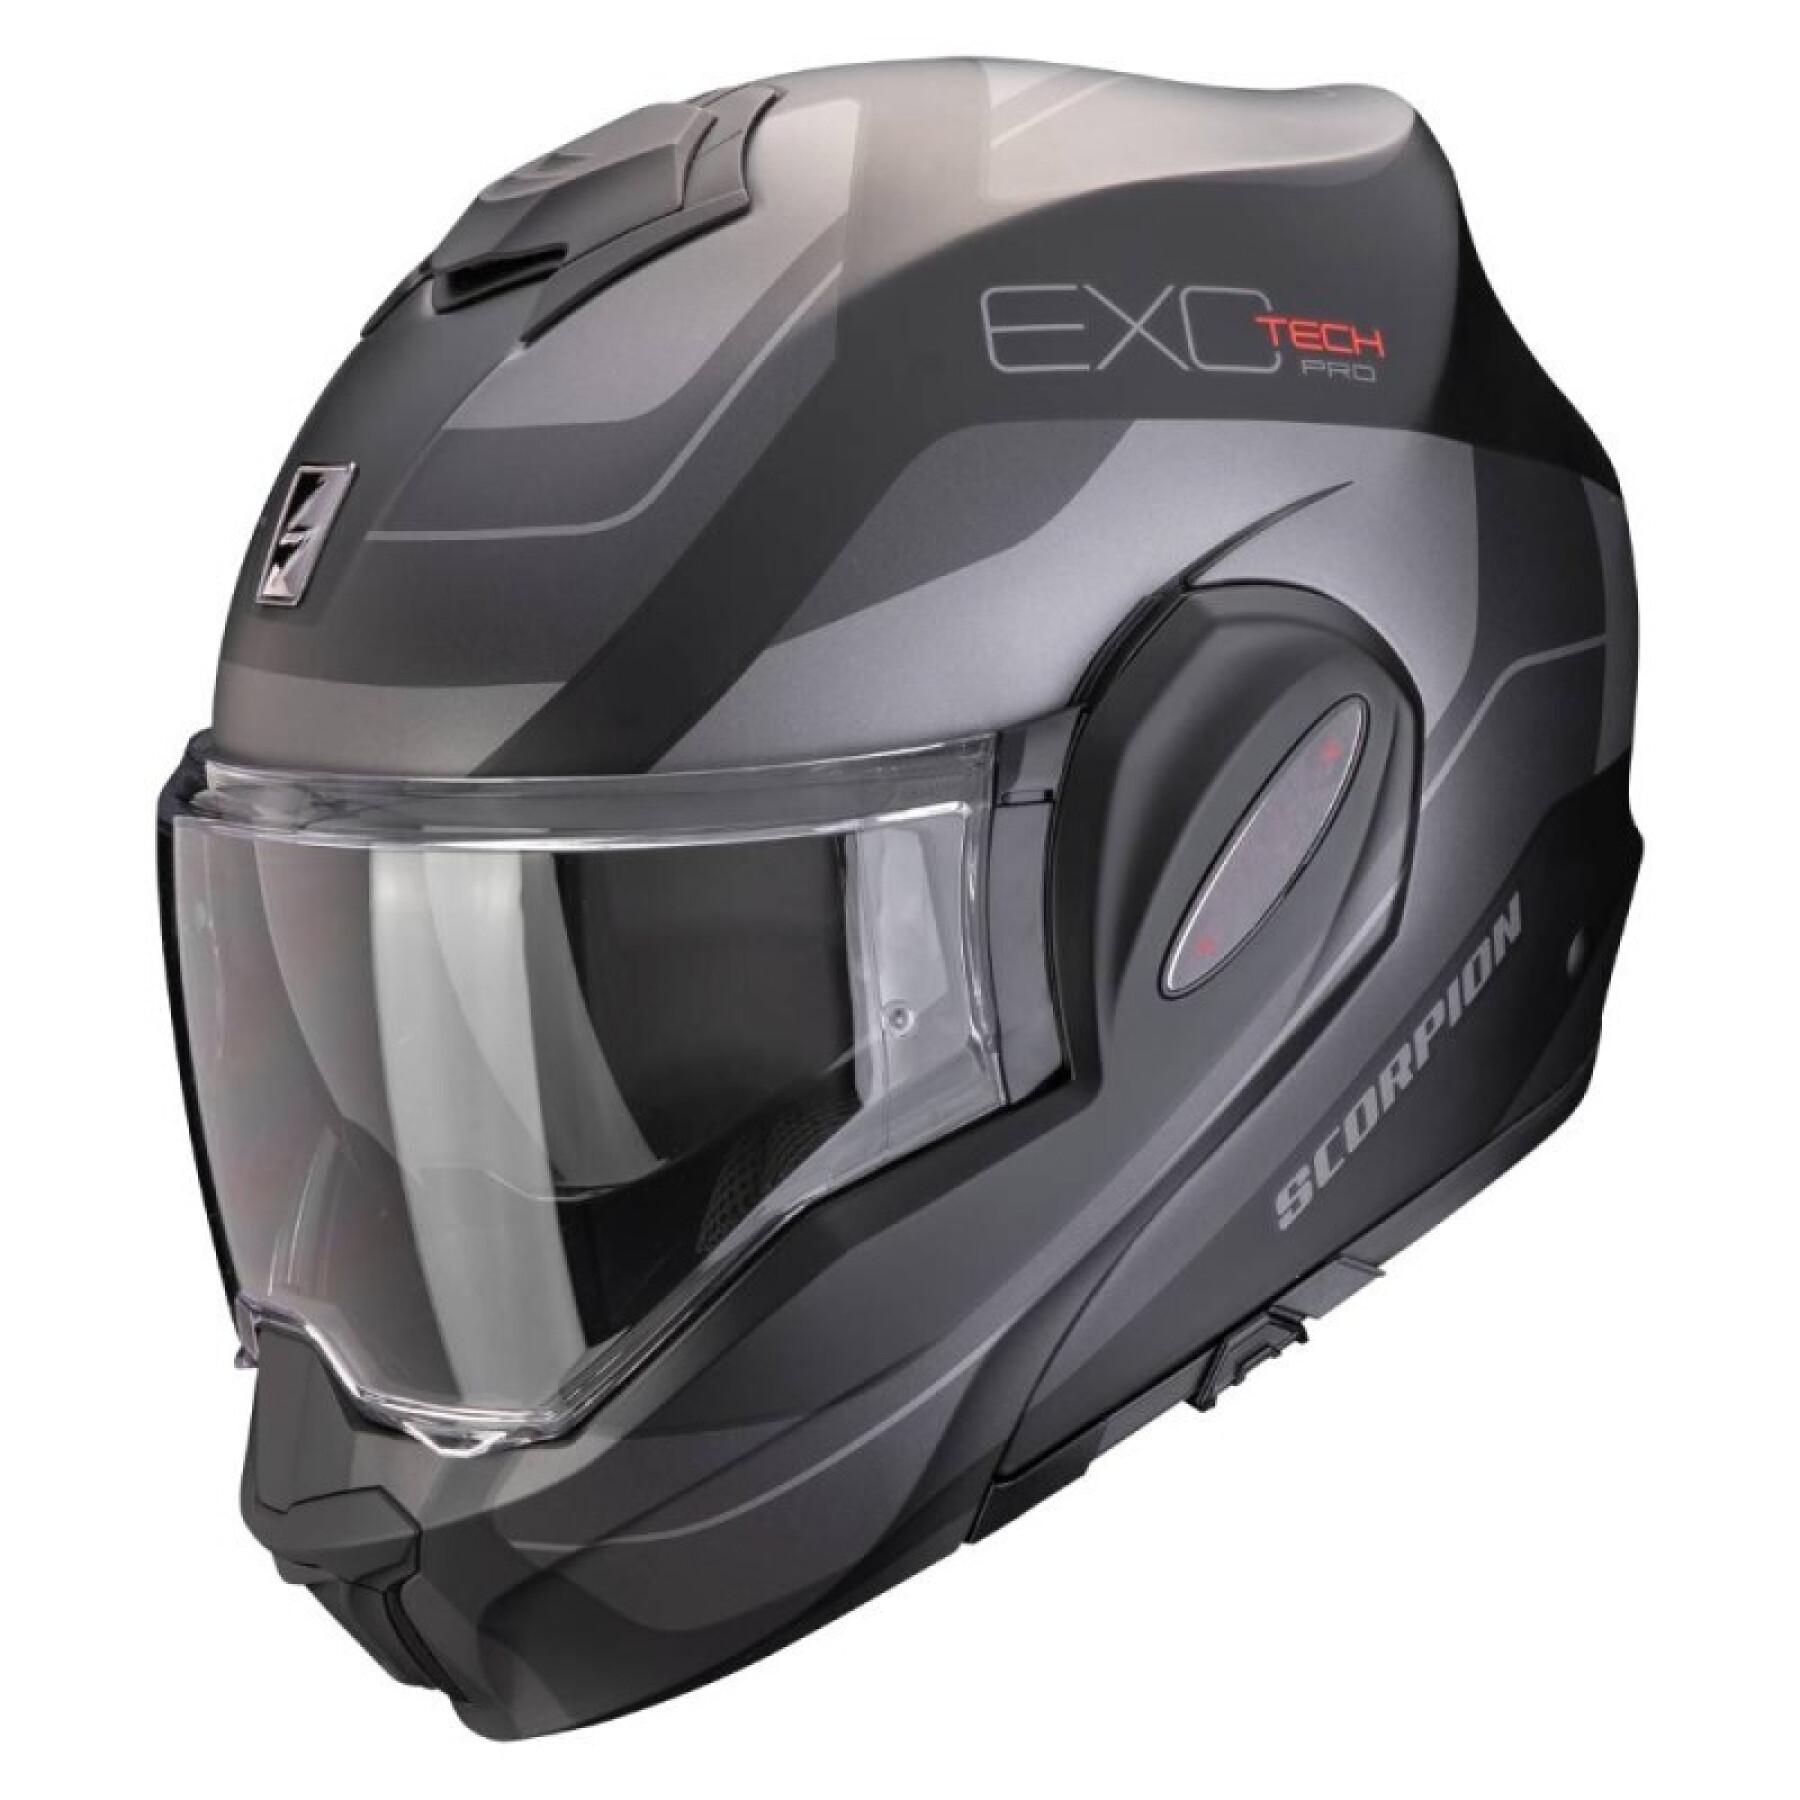 Modular motorcycle helmet Scorpion Exo-tech Evo Pro Commuta